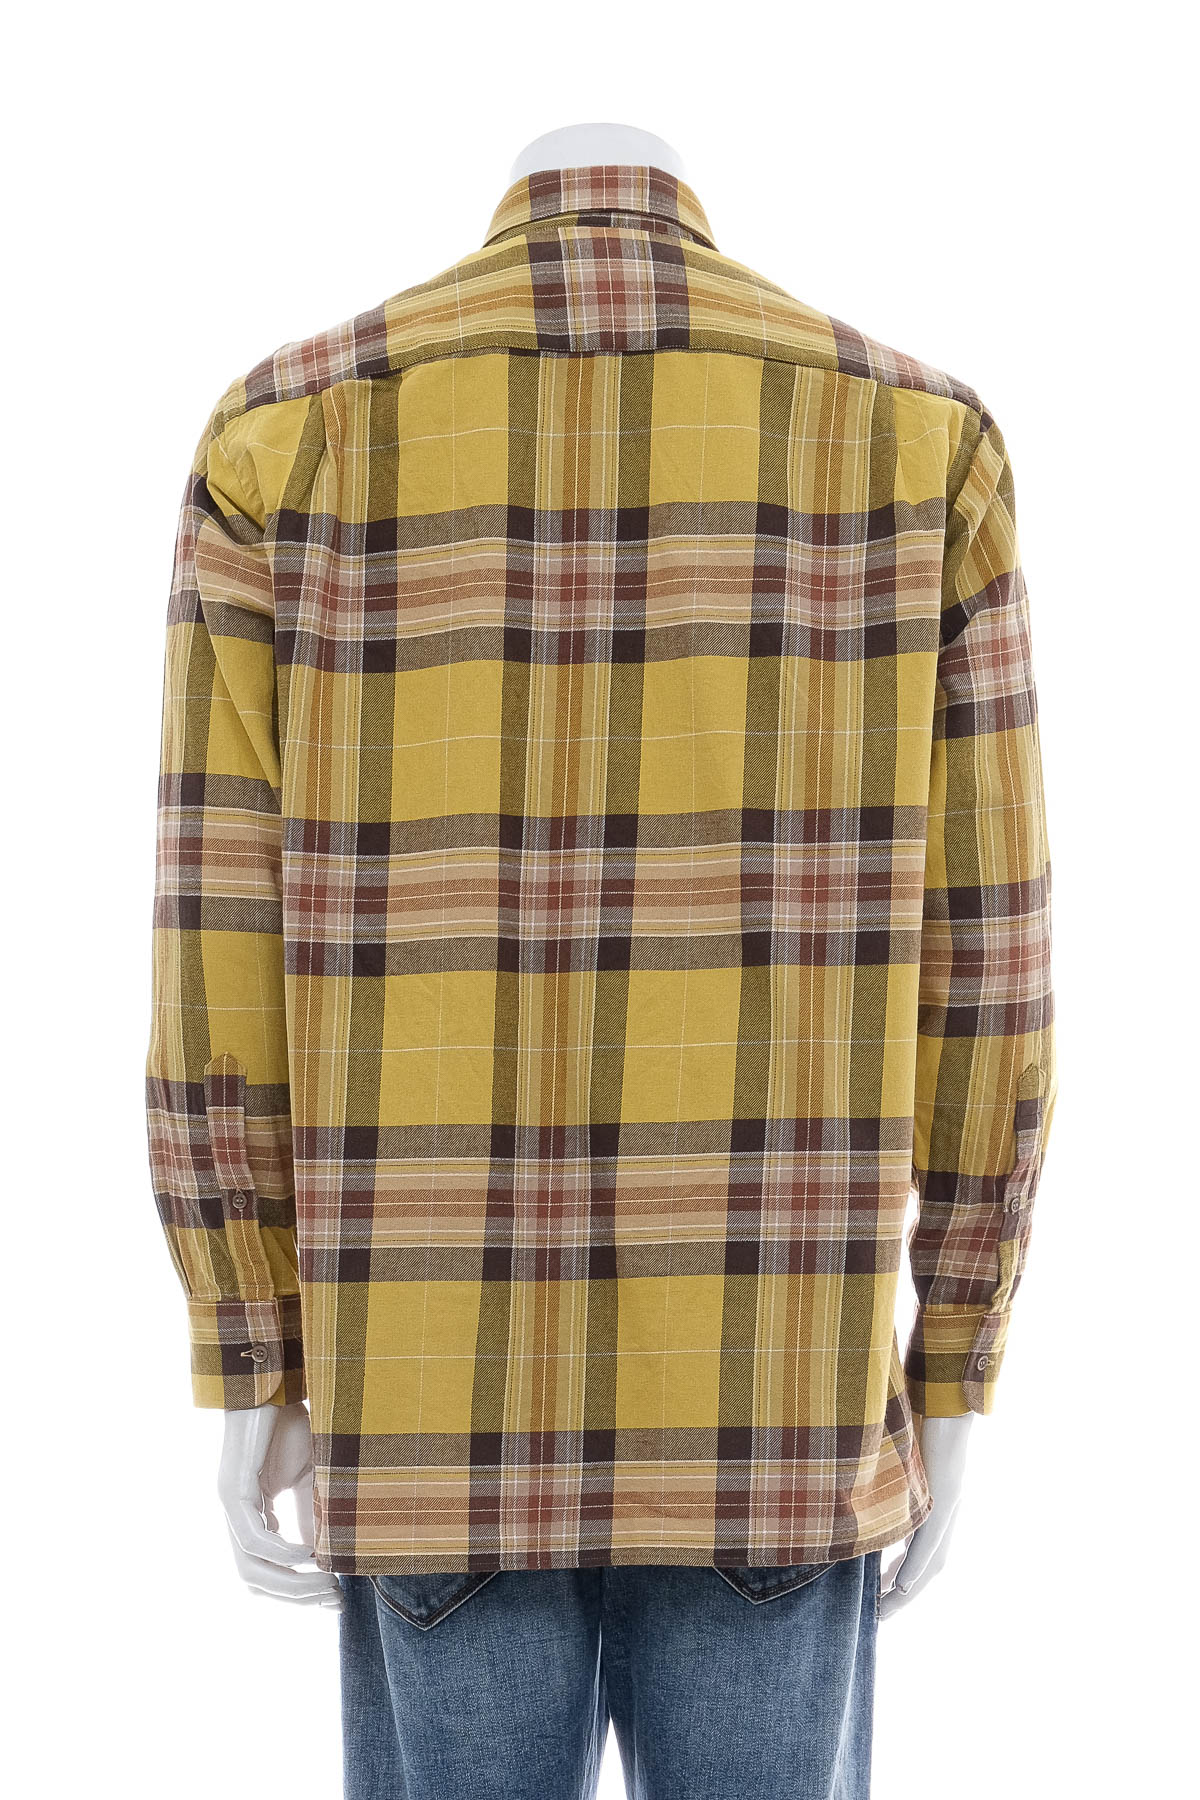 Men's shirt - Pierre Cardin - 1